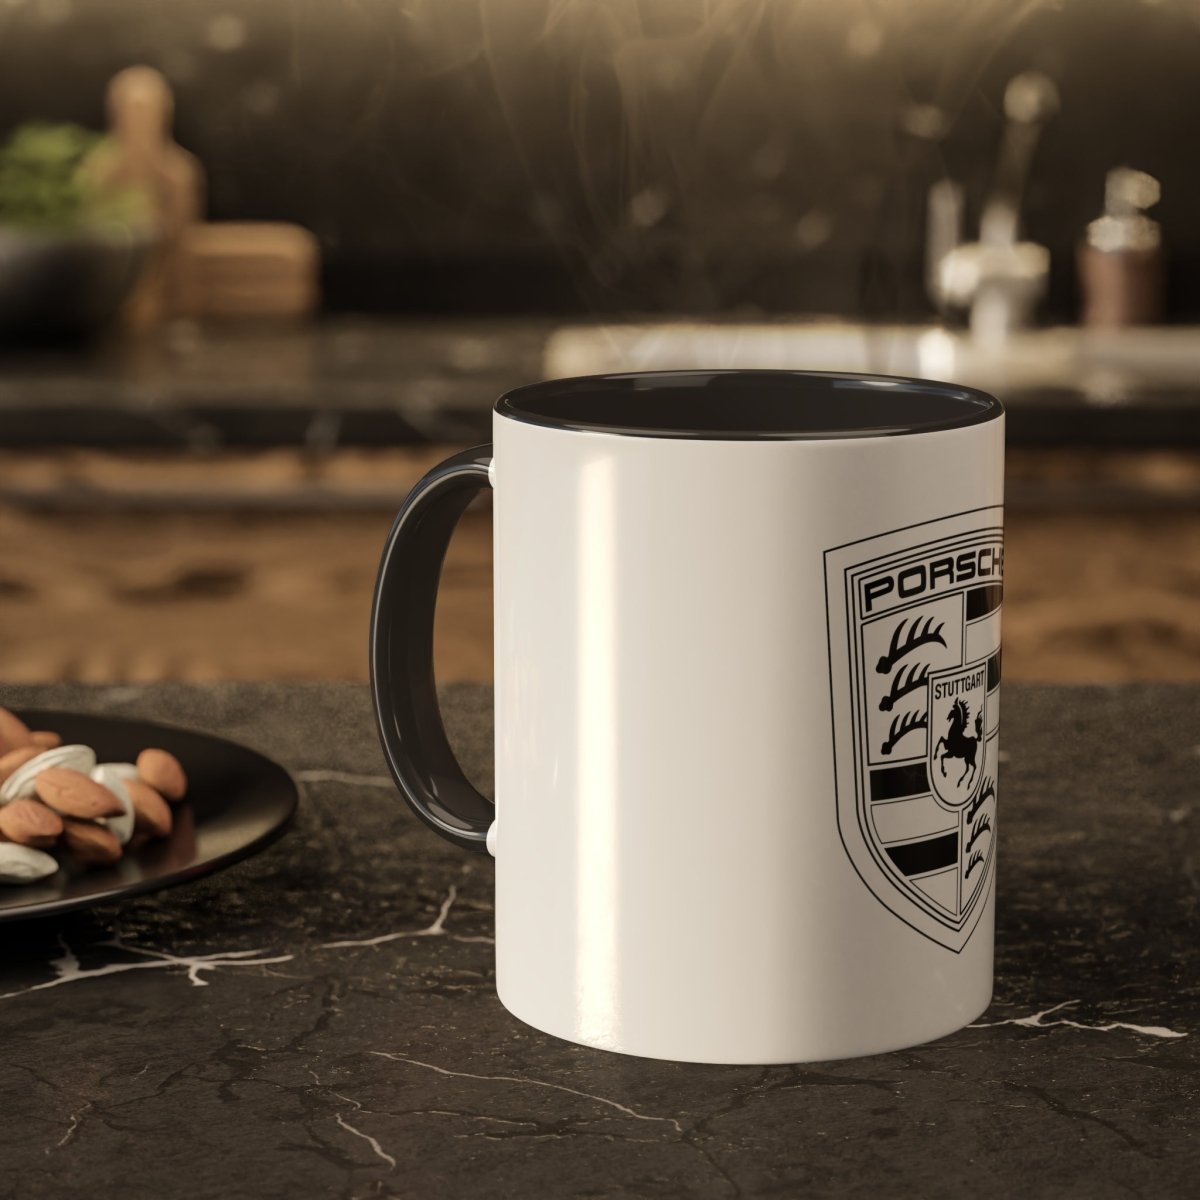 Porsche Crest Dual-Style Color or Black and White Elegance 11oz Coffee Mug - Custom Printed - AI Print Spot - Mug